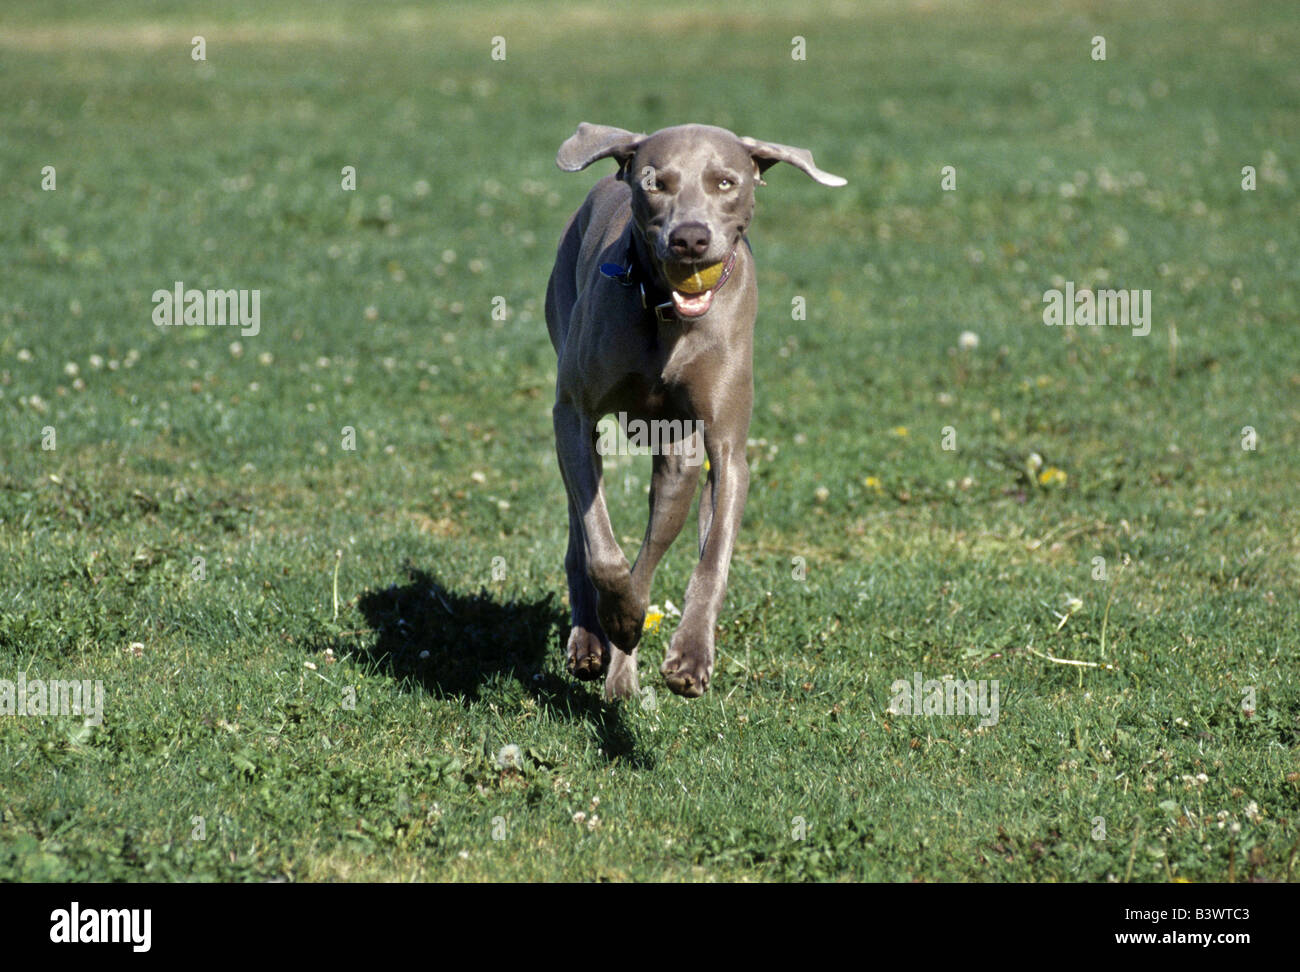 Weimaraner dog carrying a ball Stock Photo